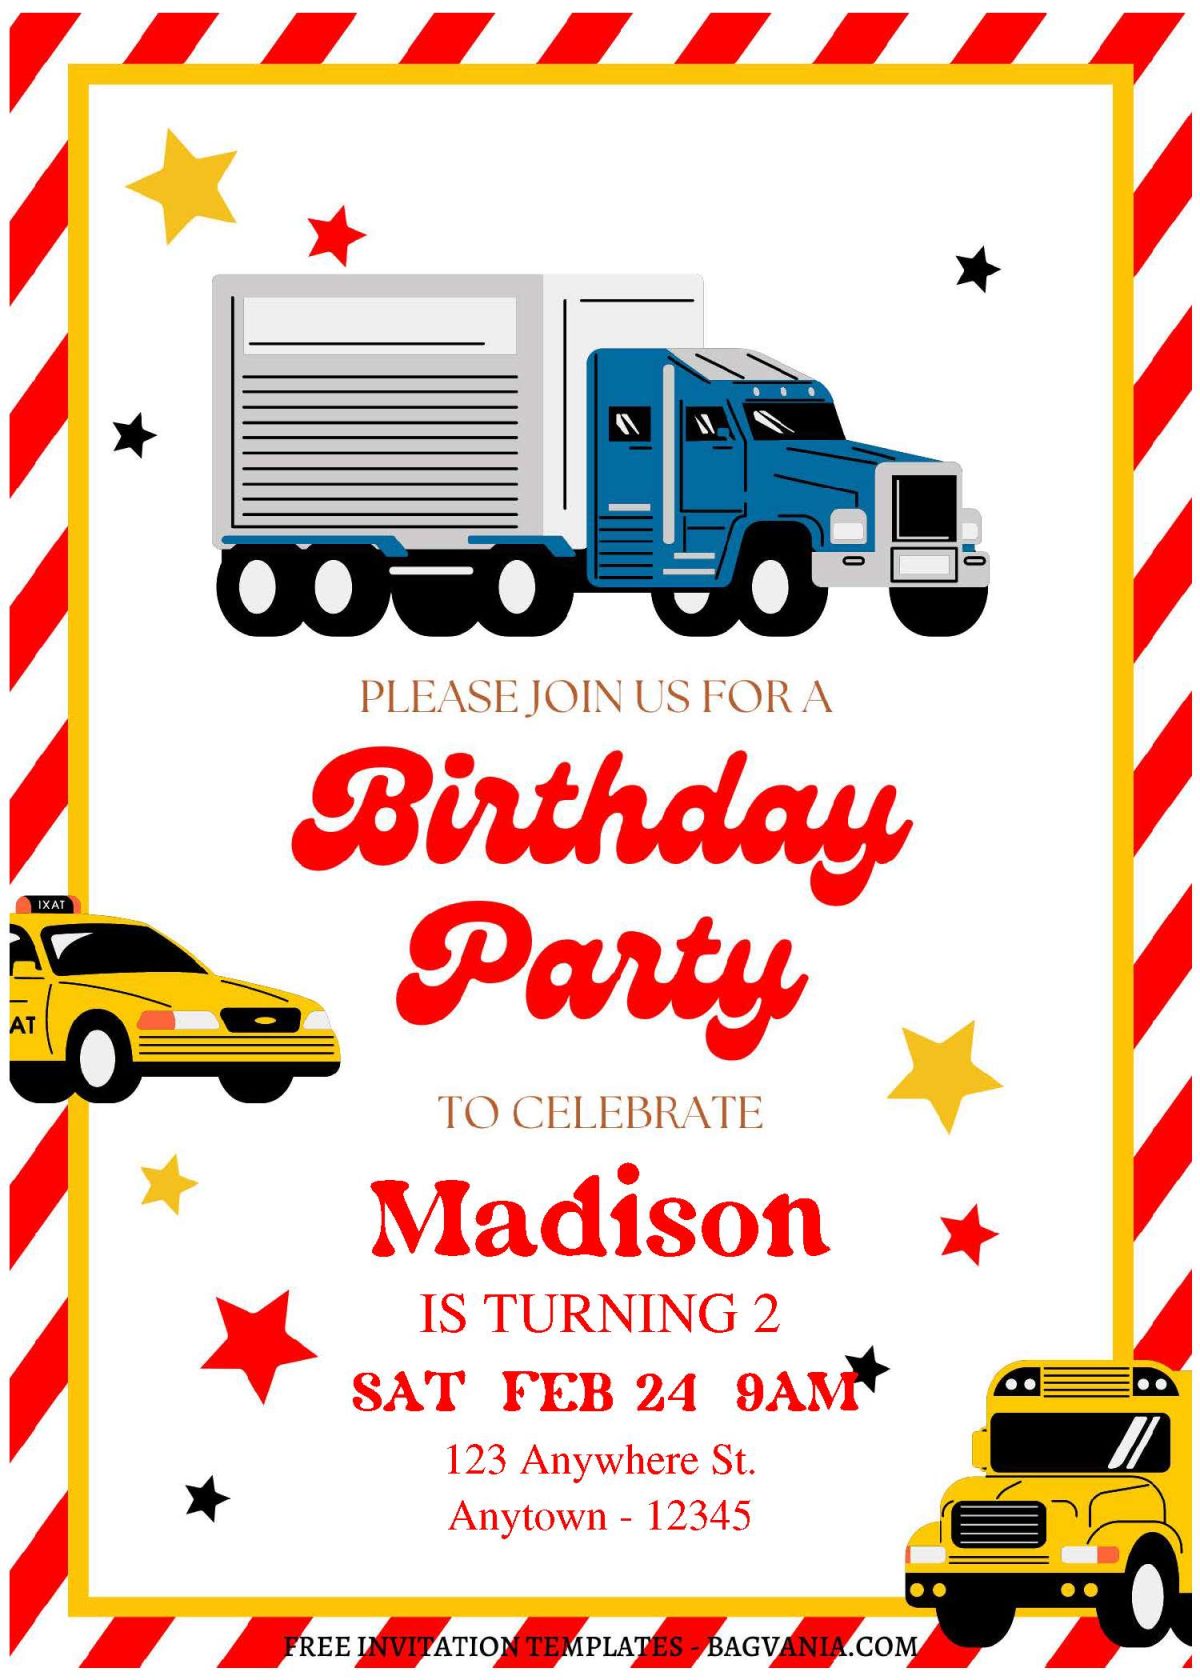 (Free Editable PDF) Simple Transportation Themed Birthday Invitation Templates A